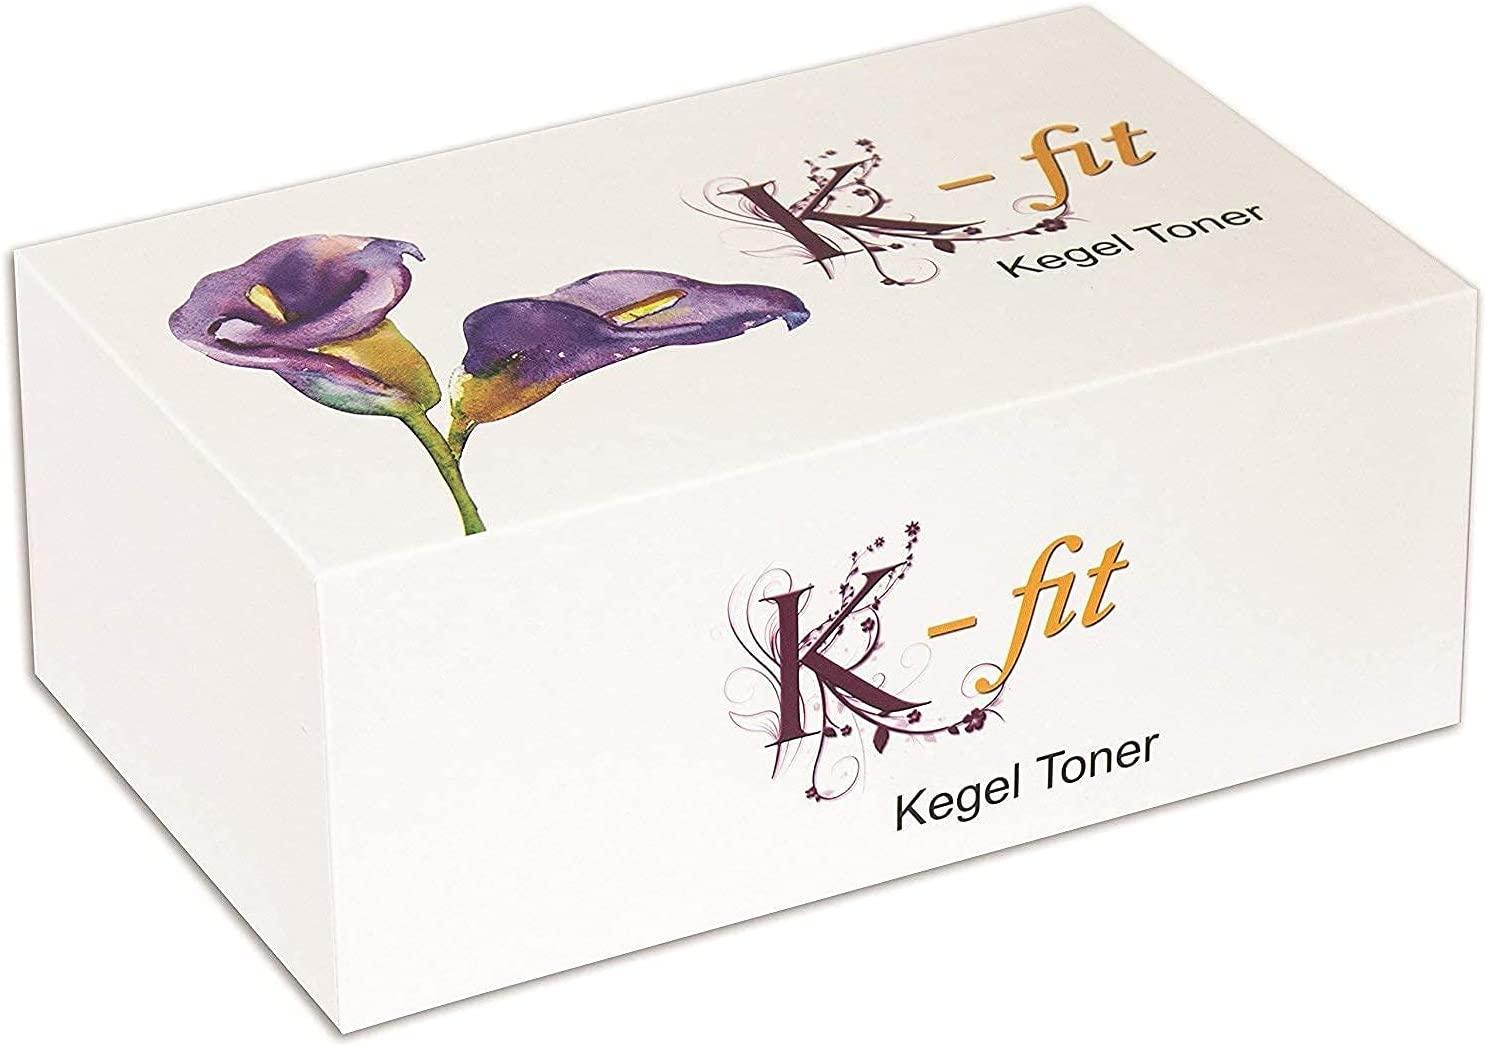 K-fit Kegel Toner for Women - Electric Pelvic Muscle Exerciser for  Automatic Kegels, Incontinence Stimulator